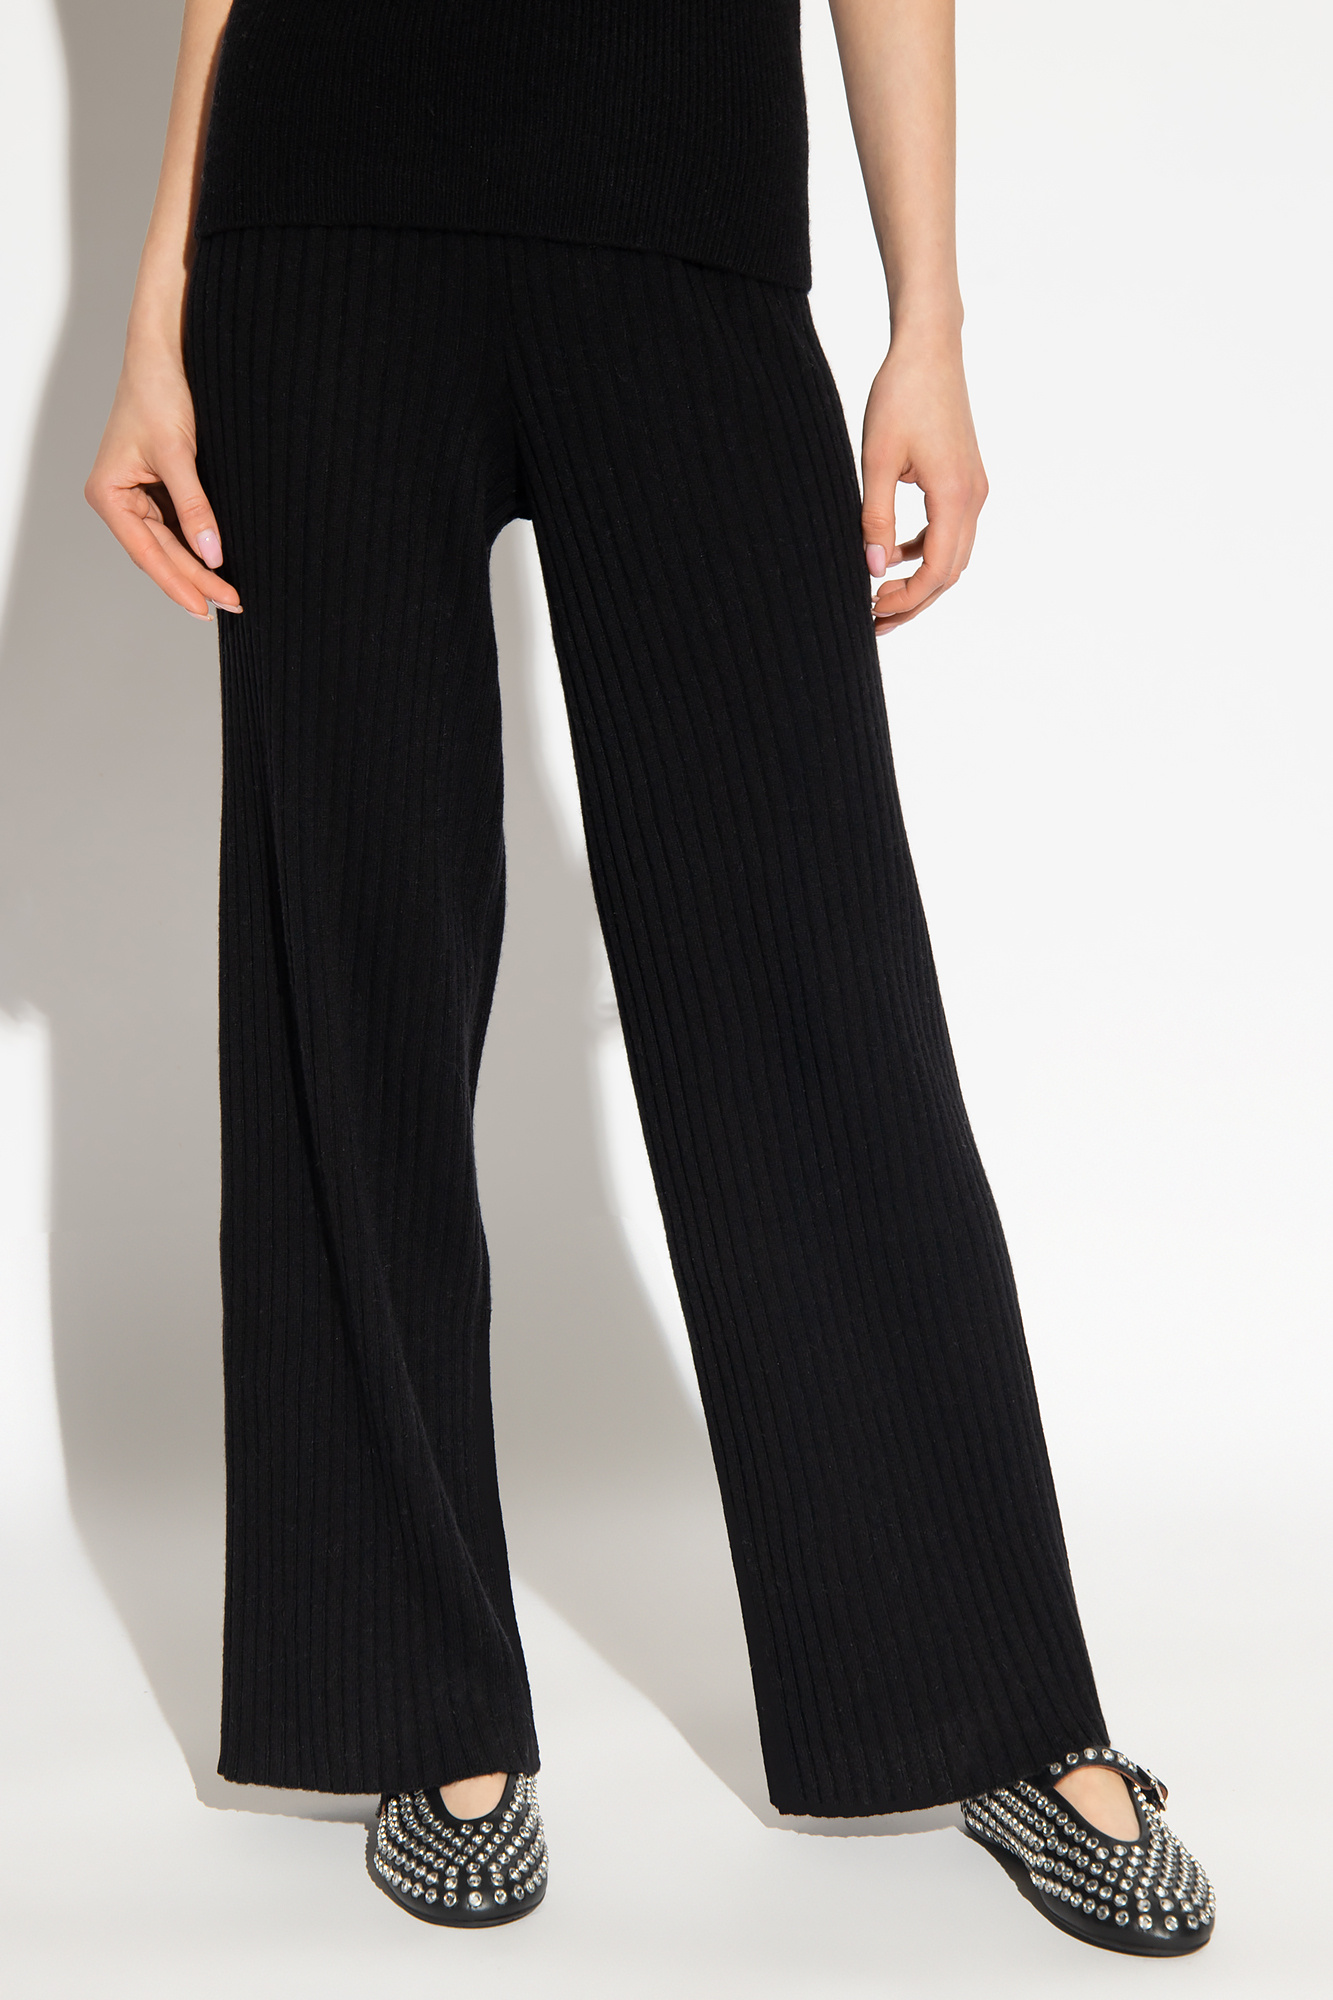 Fashionkilla Plus glitter cami strap mini dress in black, GenesinlifeShops, Lisa Yang 'Delia' ribbed Condition trousers